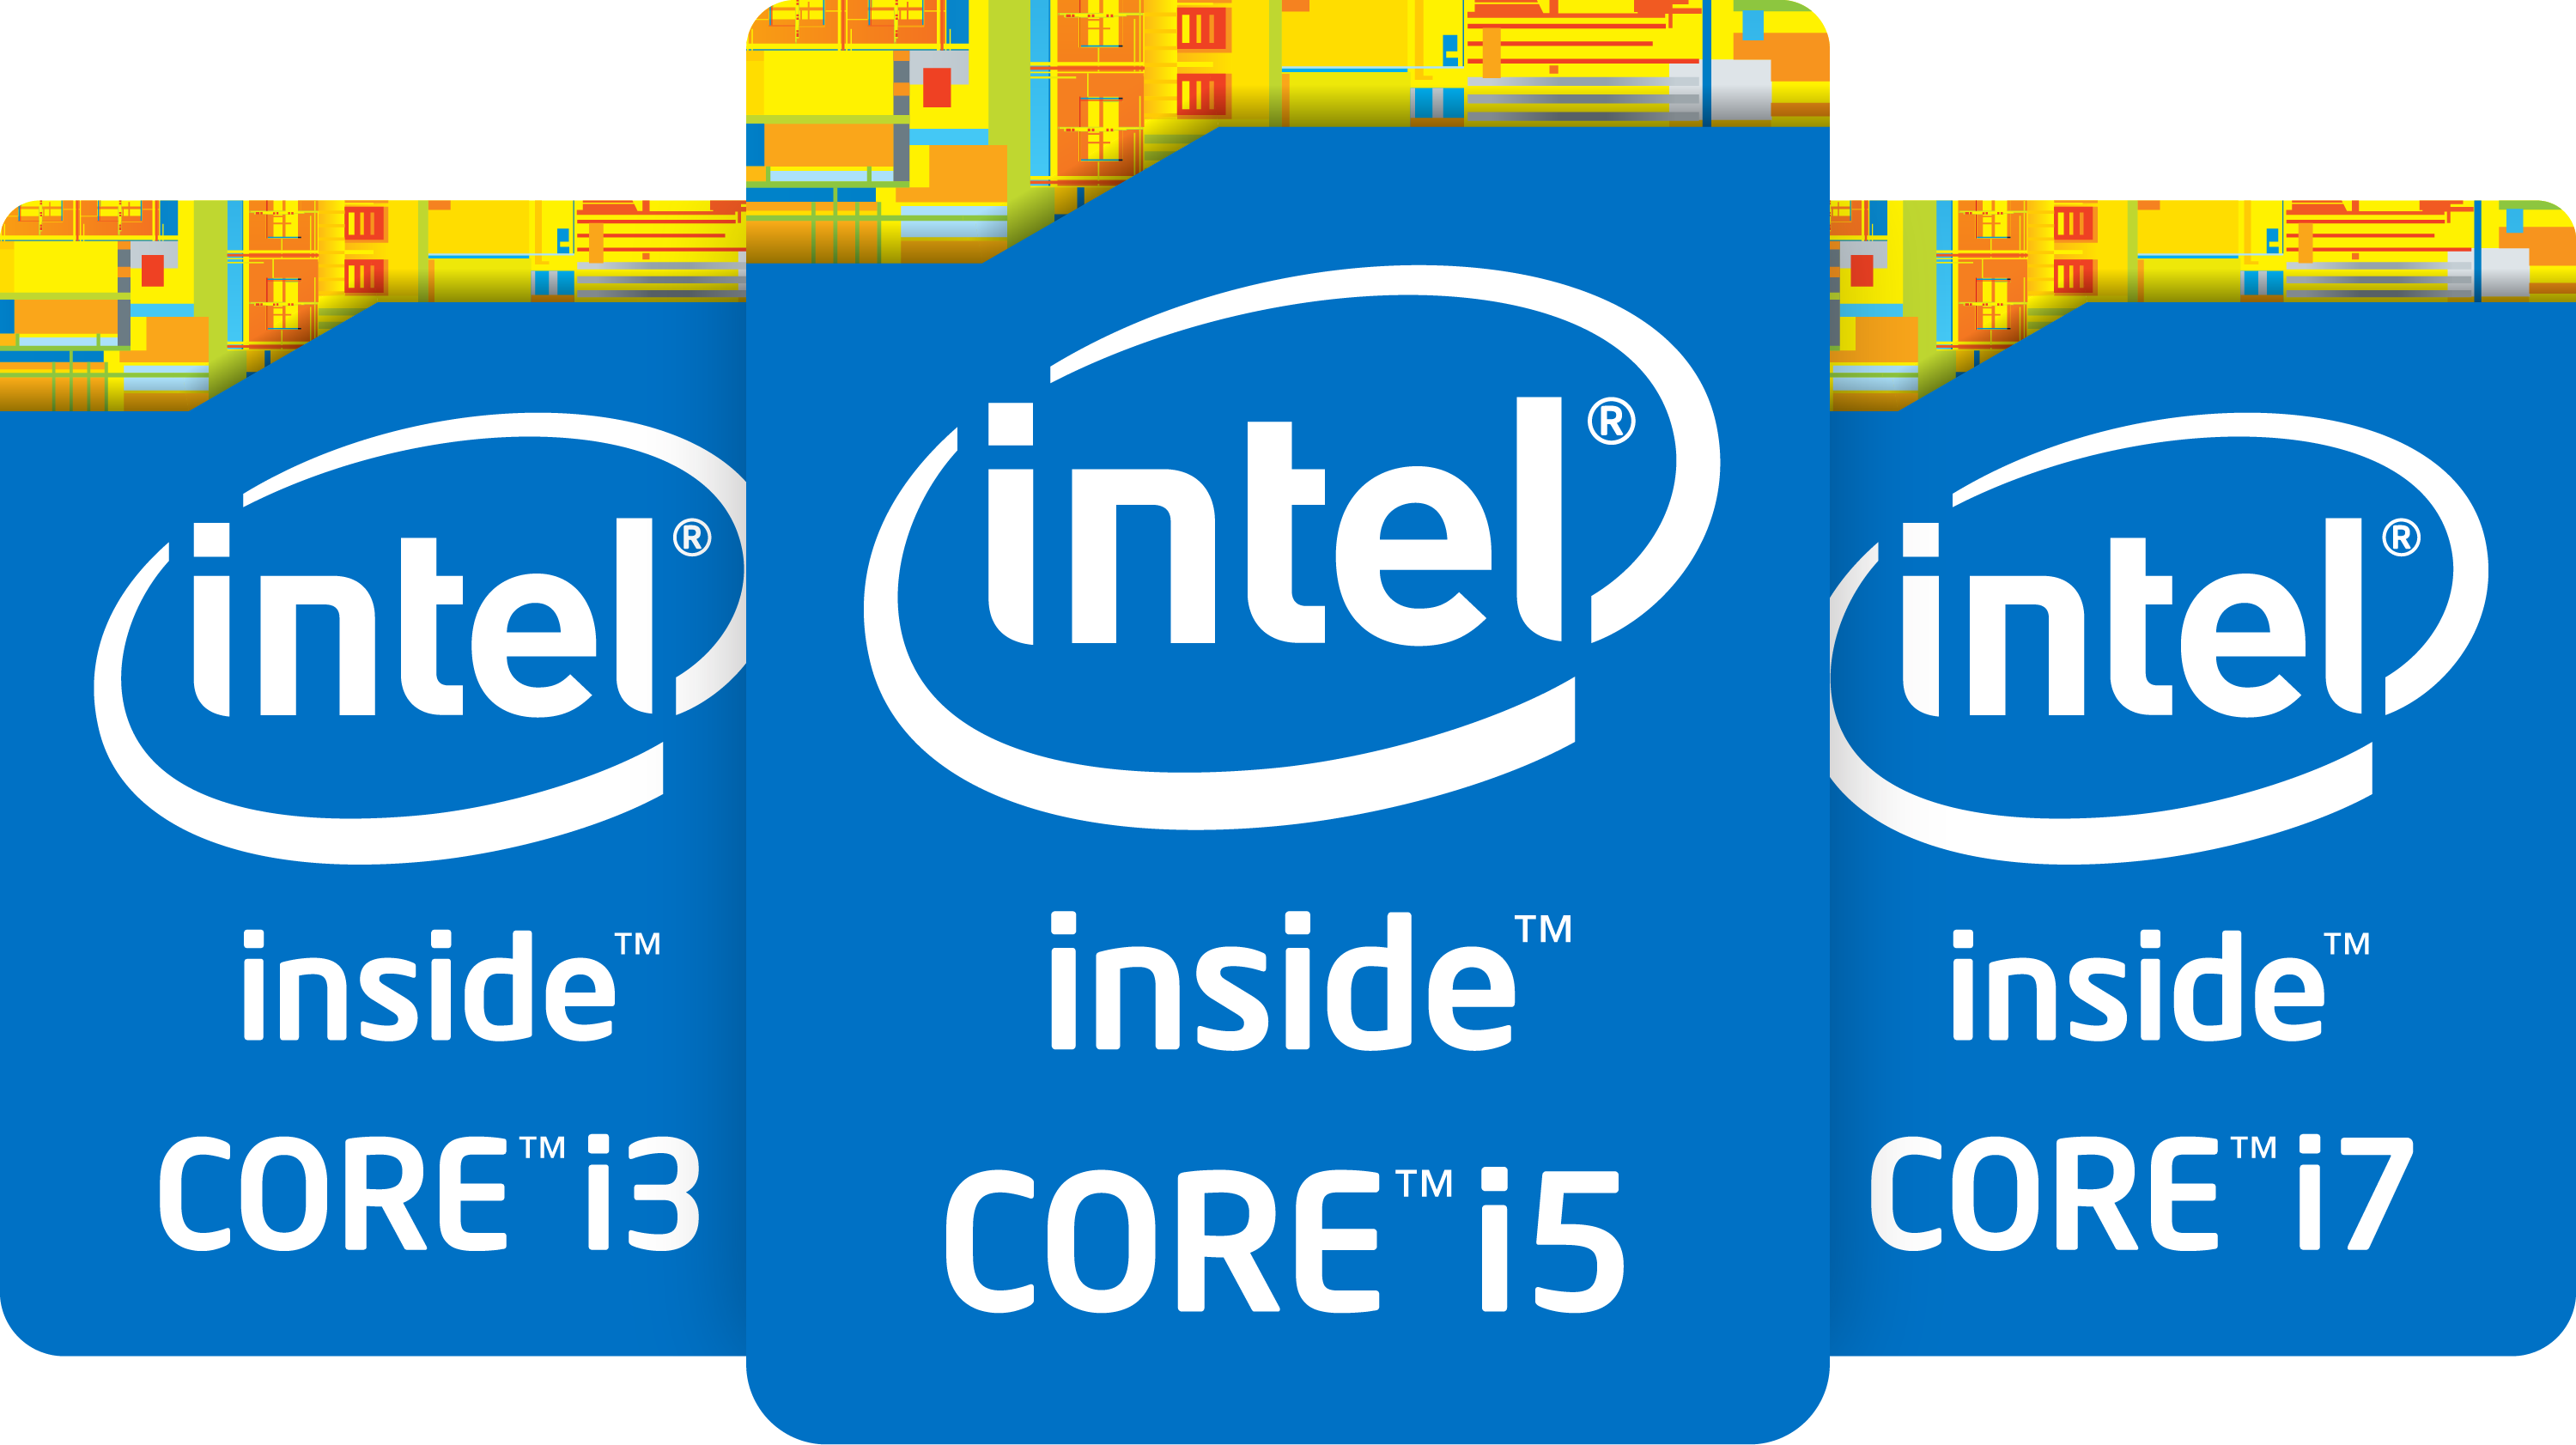 Intel int. Процессор Intel Core i7 logo. Наклейка Intel Core i7. Intel Core i3 inside. Intel Core i5 logo.